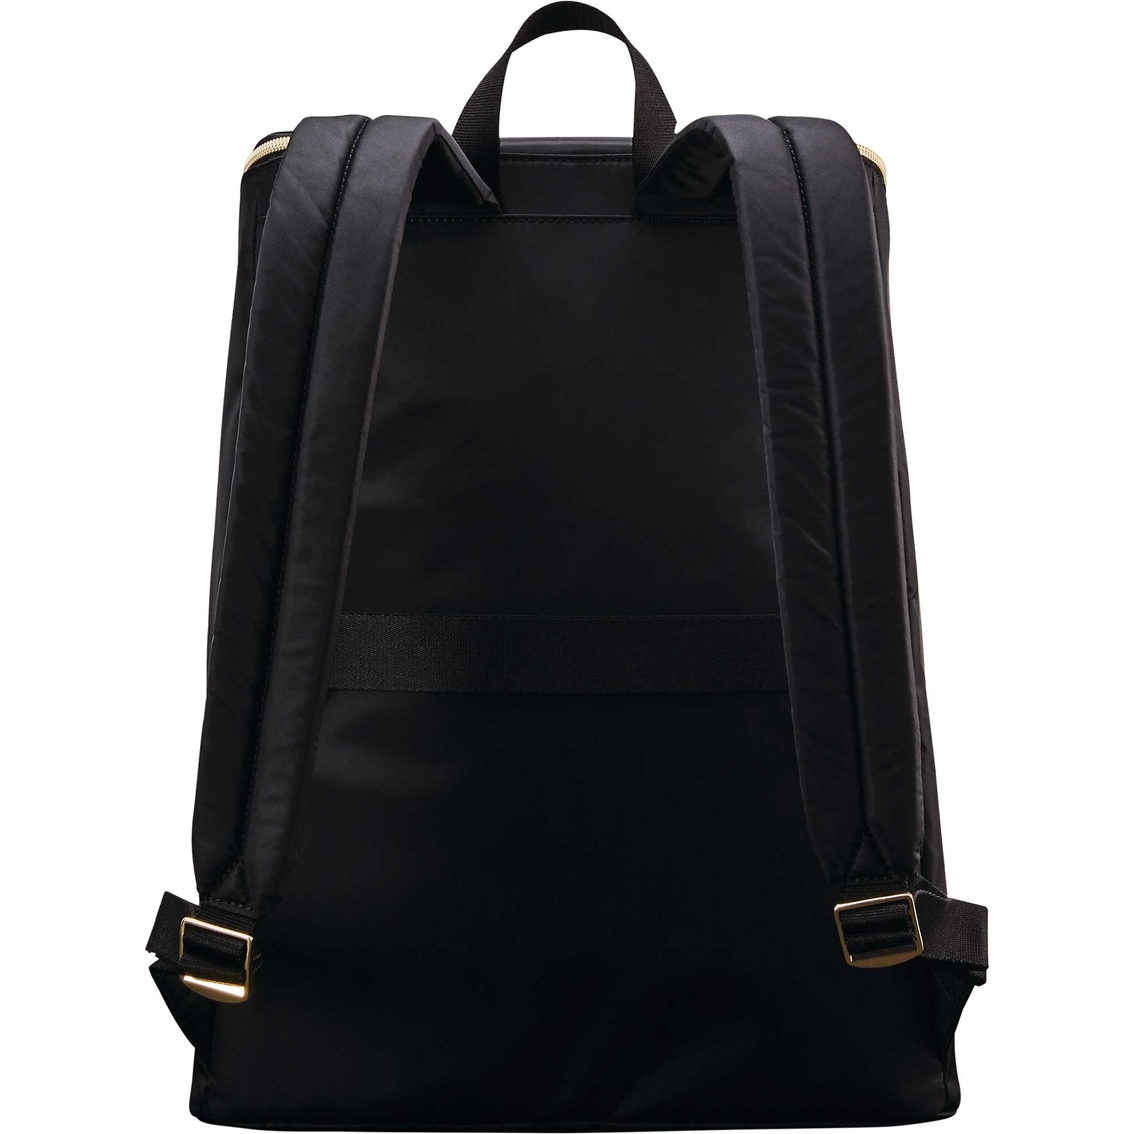 Samsonite Mobile Solution Deluxe Backpack - Image 2 of 10